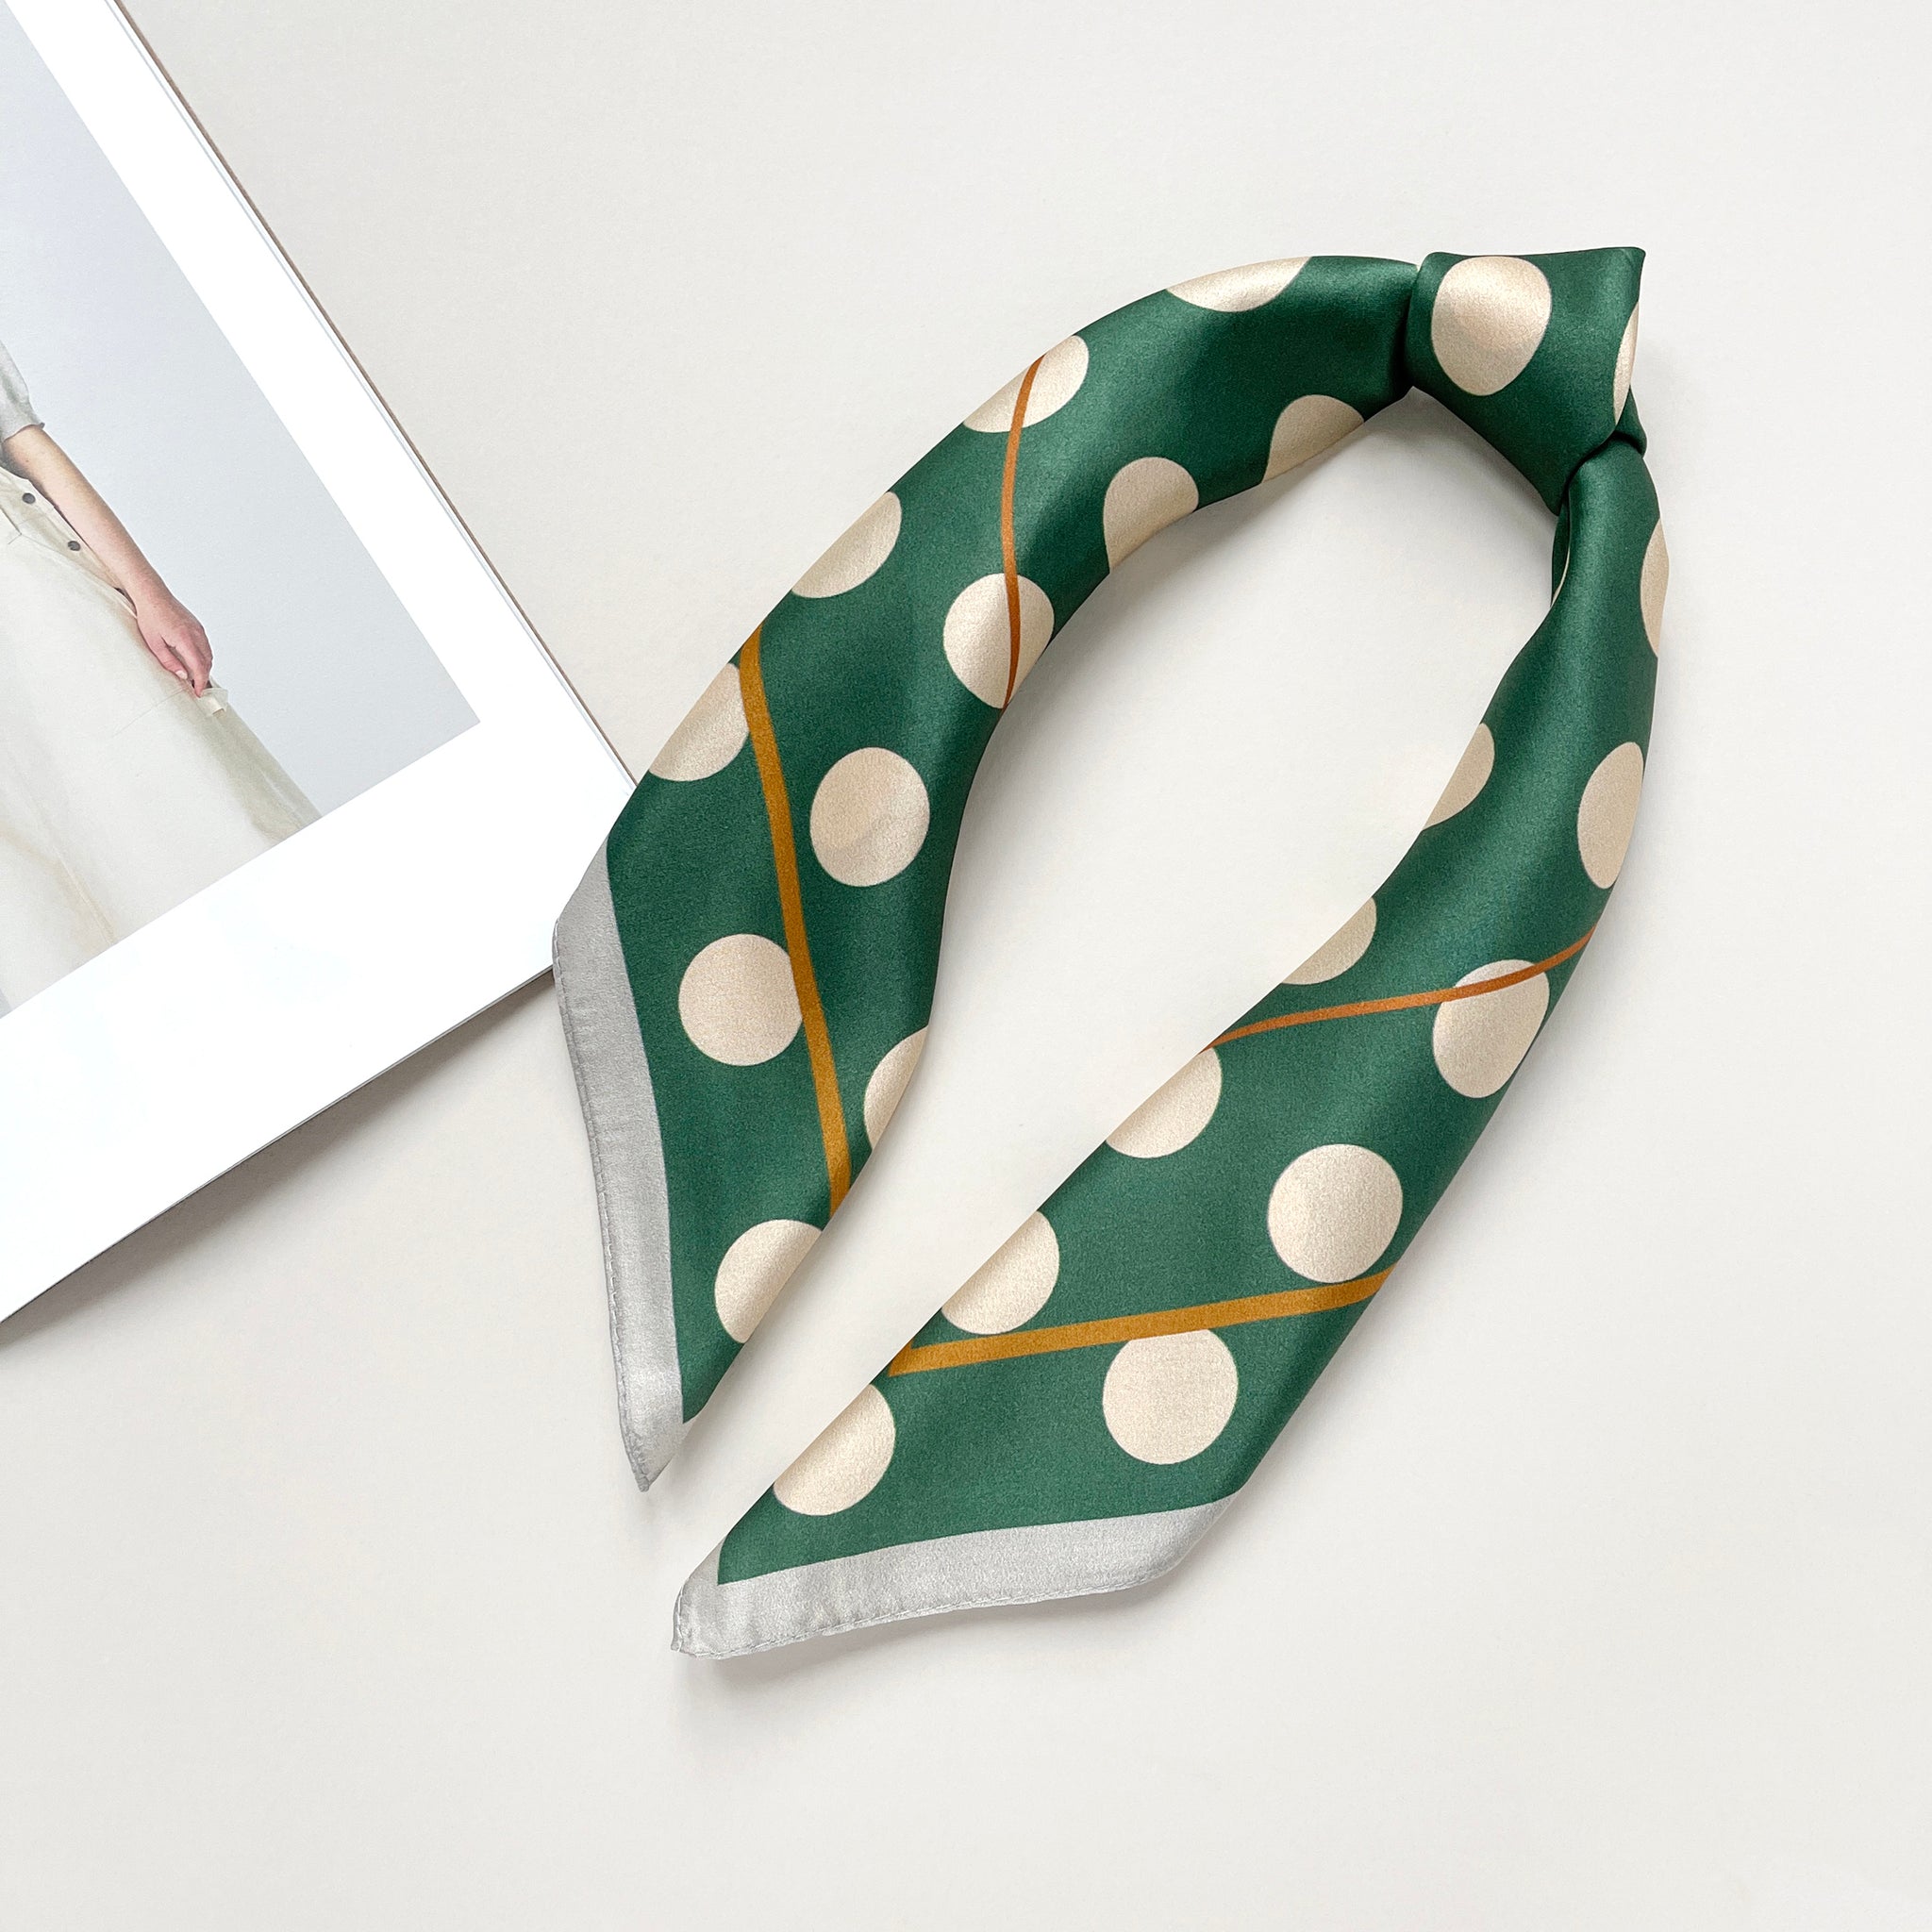 a jade green silk scarf bandana featuring light beige polka dot print, knotted as a headband 